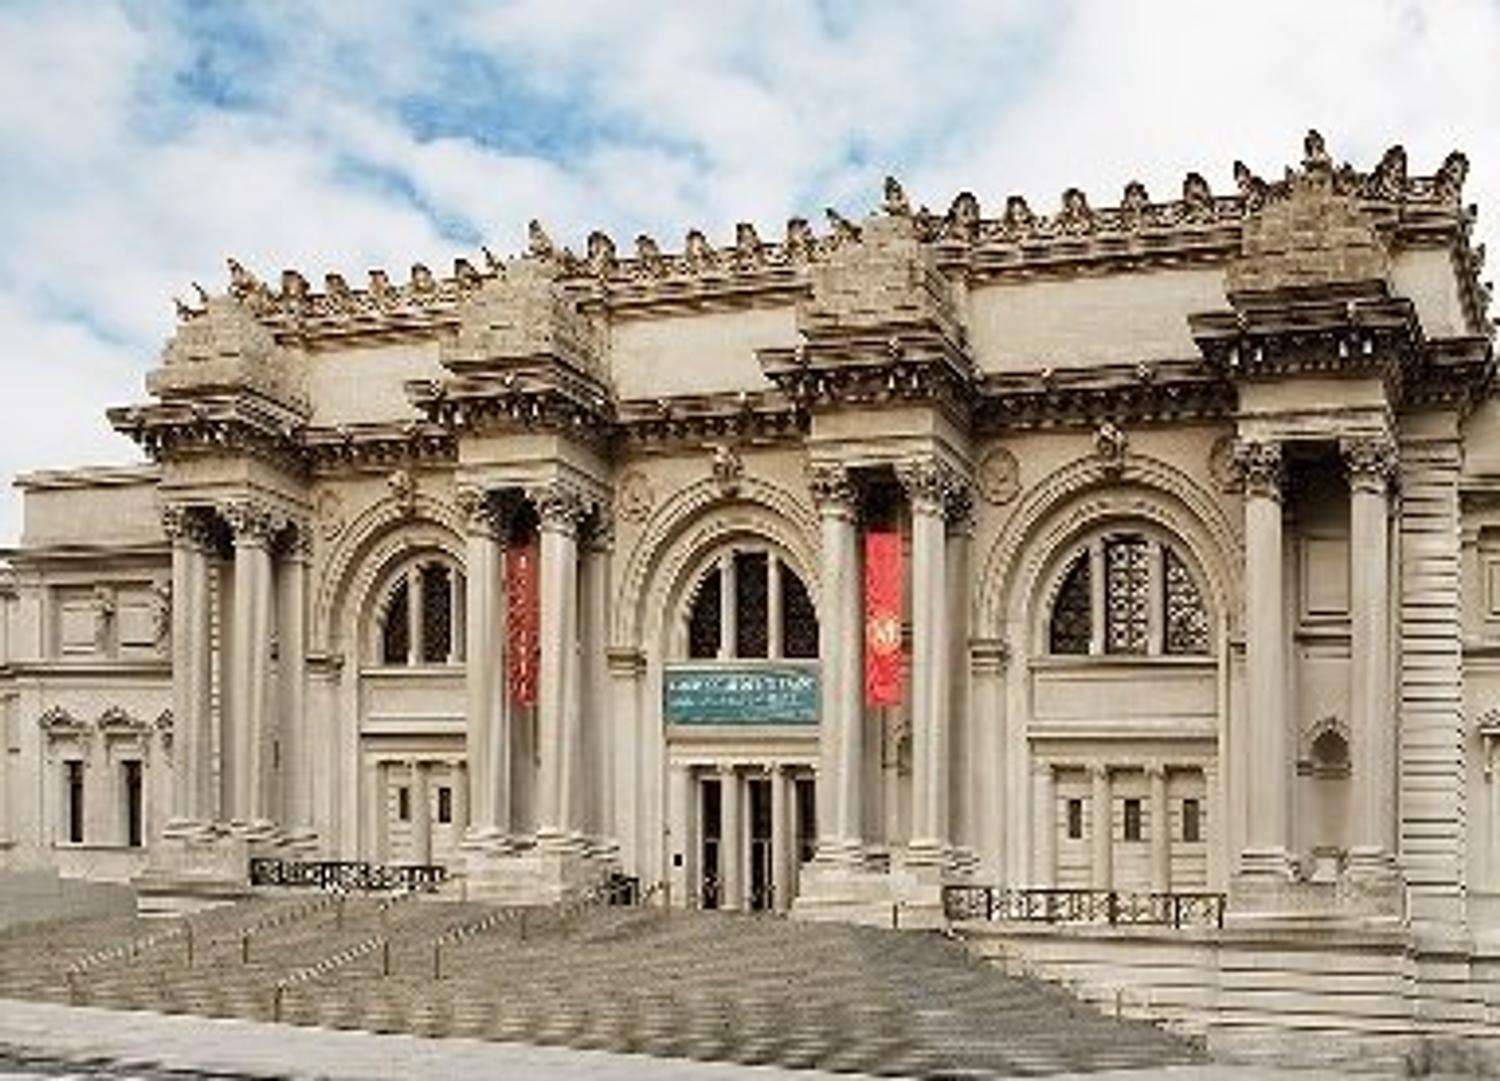 Art Worth Millions Sold by Metropolitan Museum in 2013